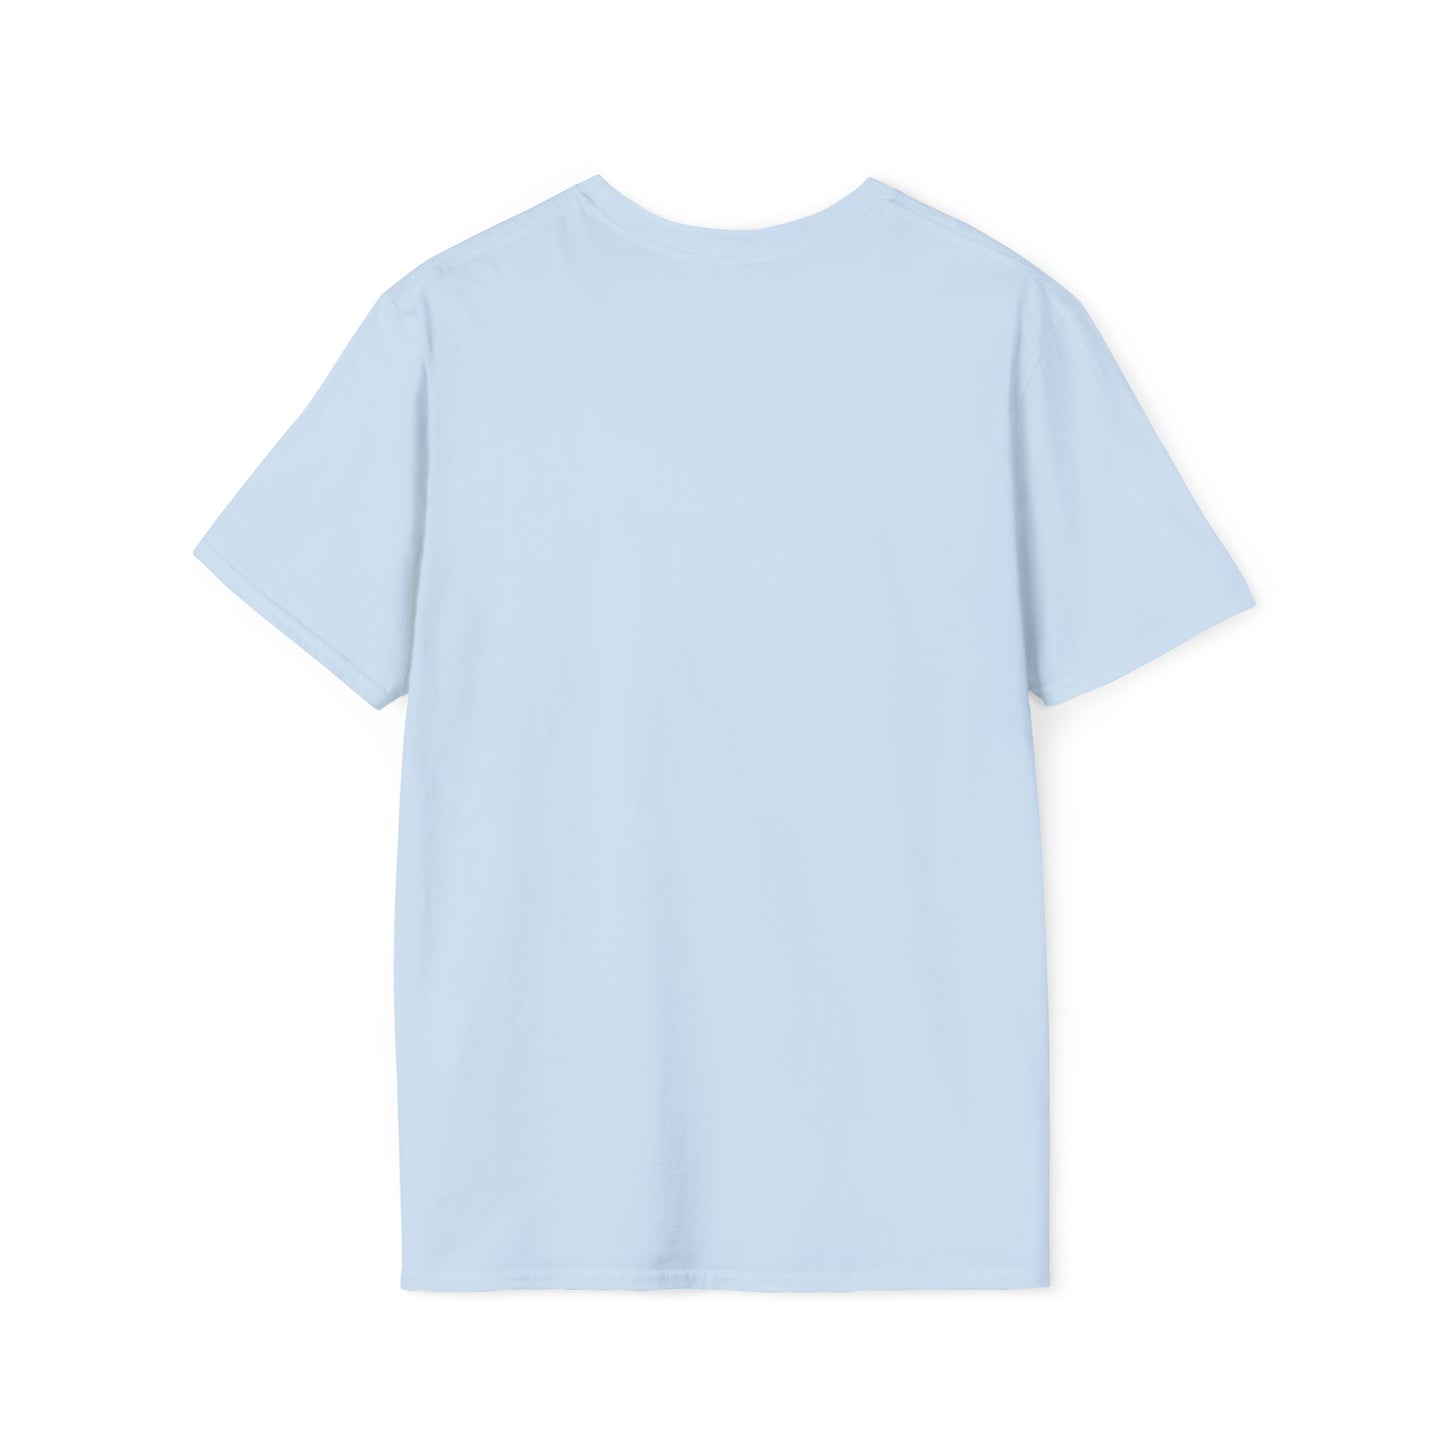 Med Surg Nurse, Med Surg Nurse Gift, Nurse Preceptor Gift, Unisex Softstyle T-Shirt